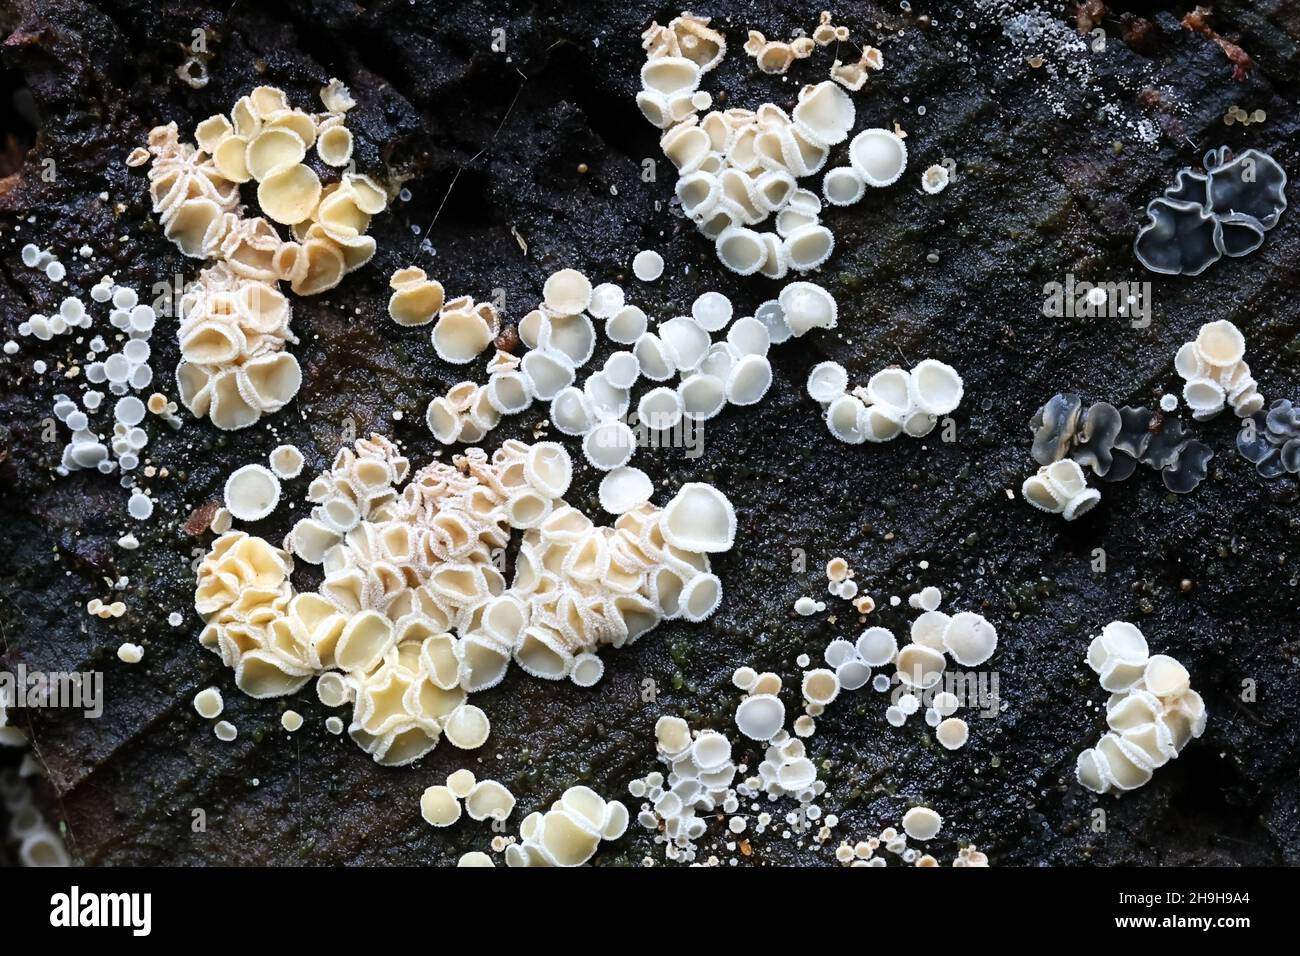 Lachnum virgineum, sometimes called the snowy disco fungus, wild mushroom from Finland Stock Photo